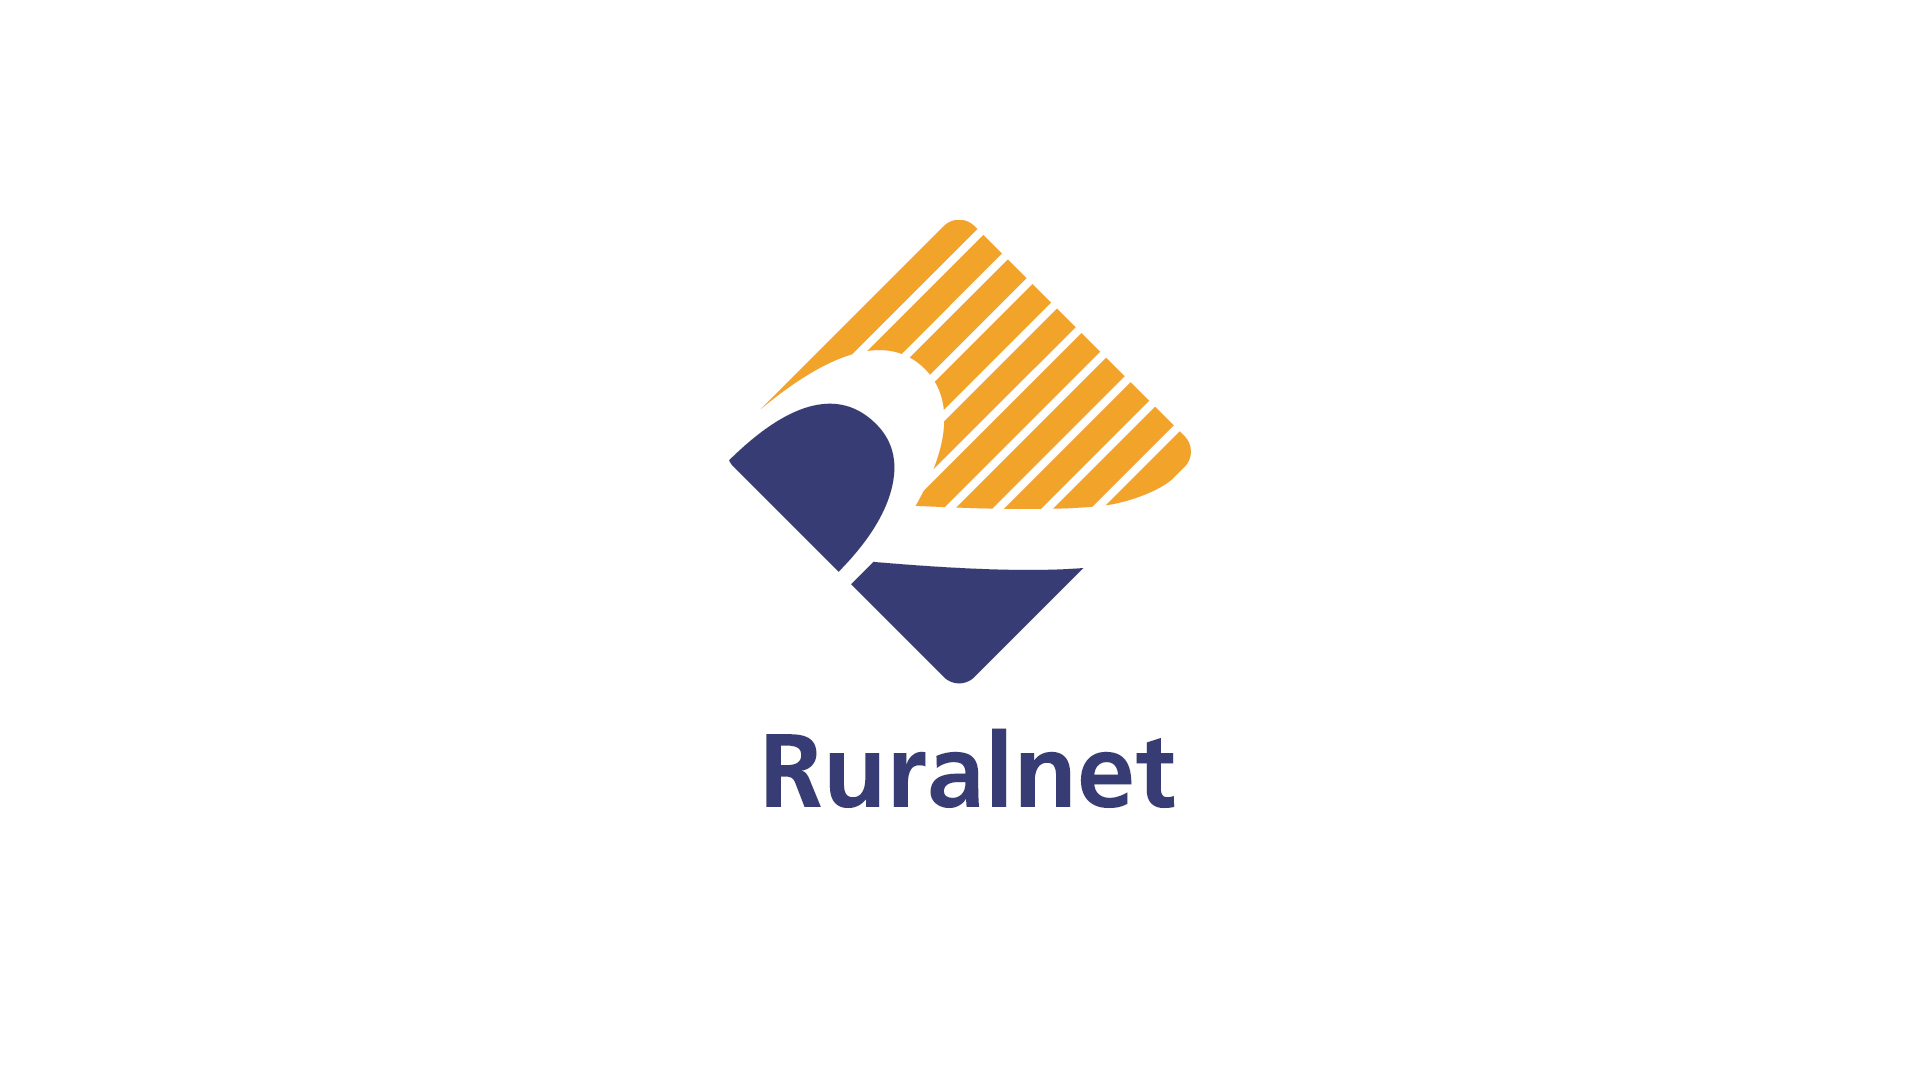 Ruralnet Logo and Brand Design - Saunders Design Group